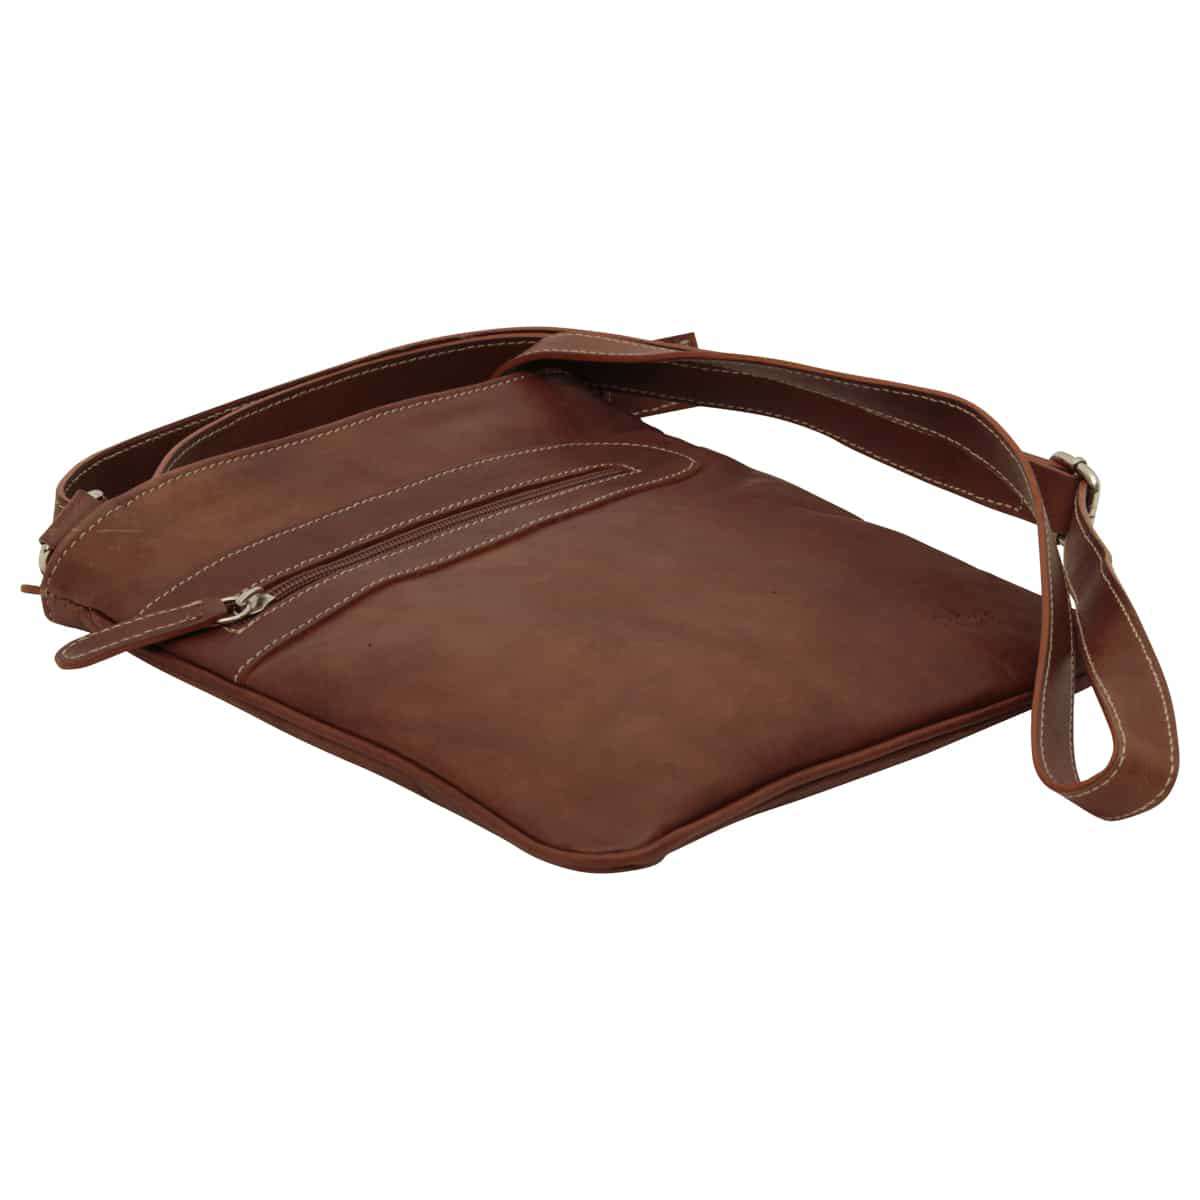 Leather cross body bag with zip pocket - Chestnut | 086161CA UK | Old Angler Firenze